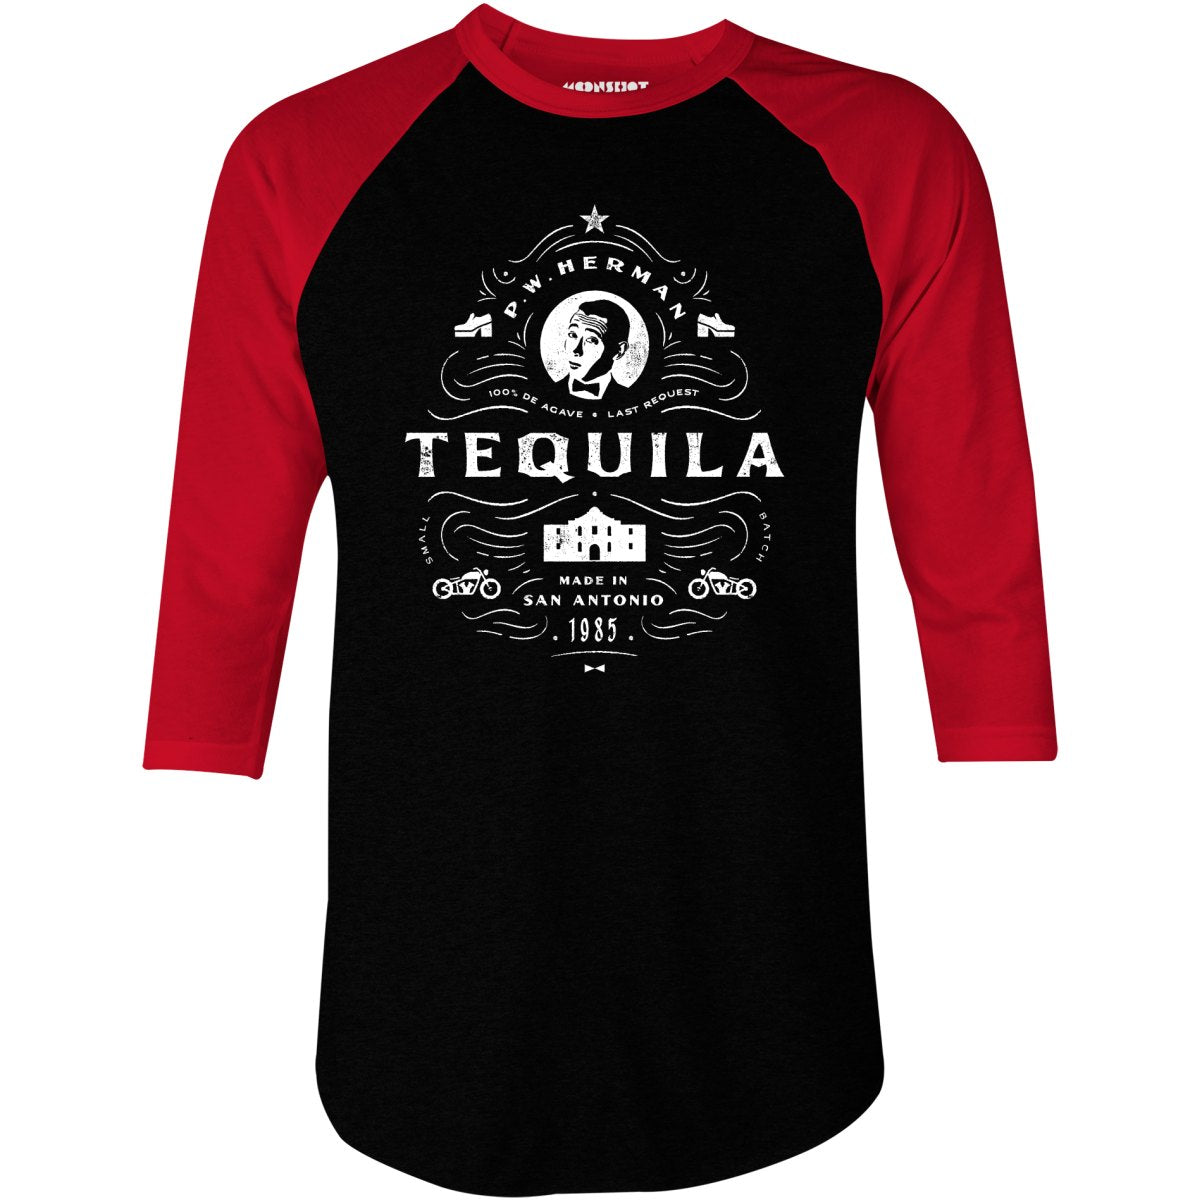 P.W. Herman Brand Tequila - 3/4 Sleeve Raglan T-Shirt